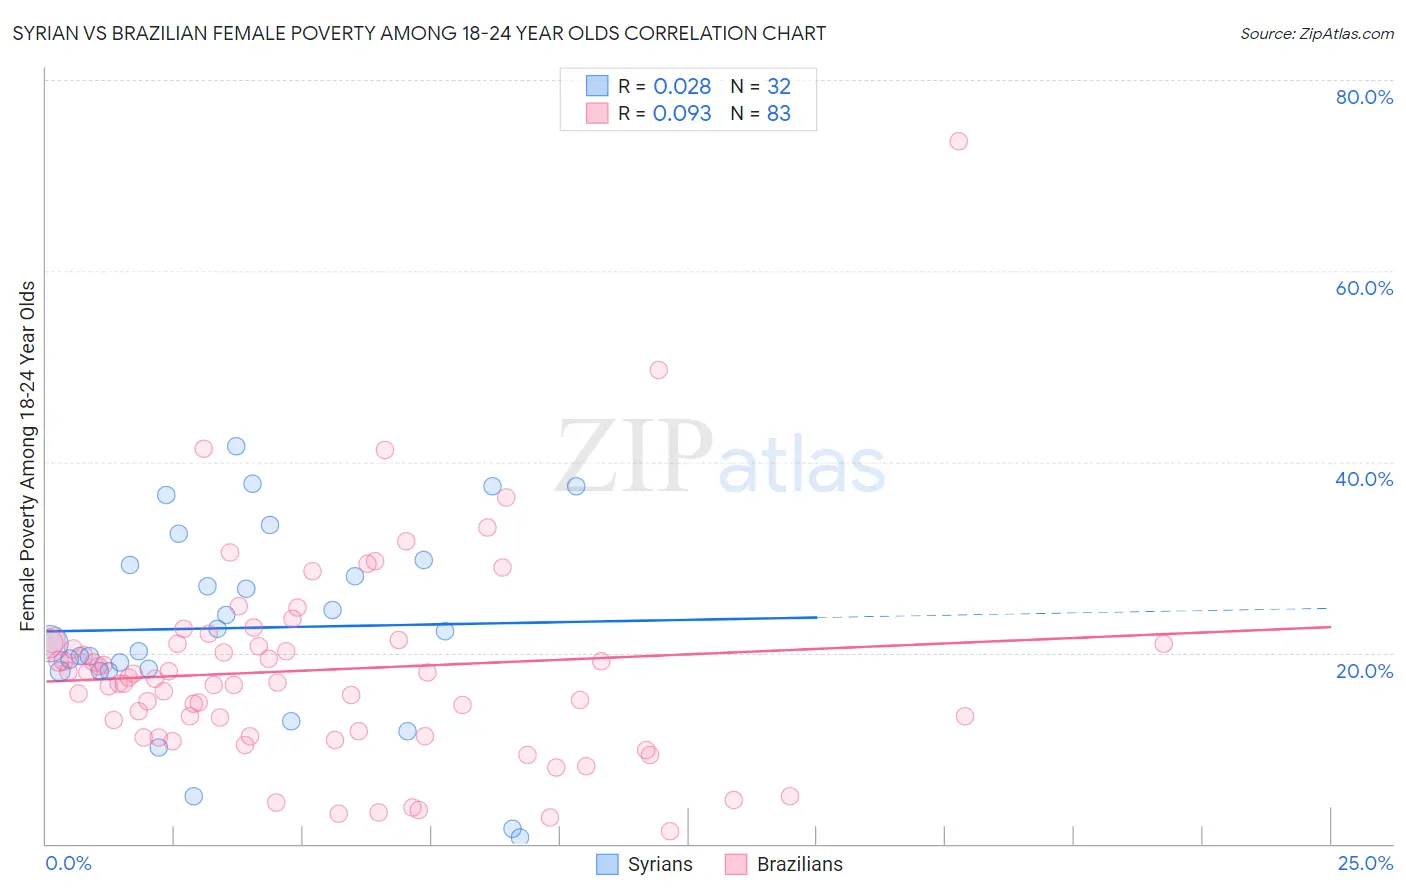 Syrian vs Brazilian Female Poverty Among 18-24 Year Olds